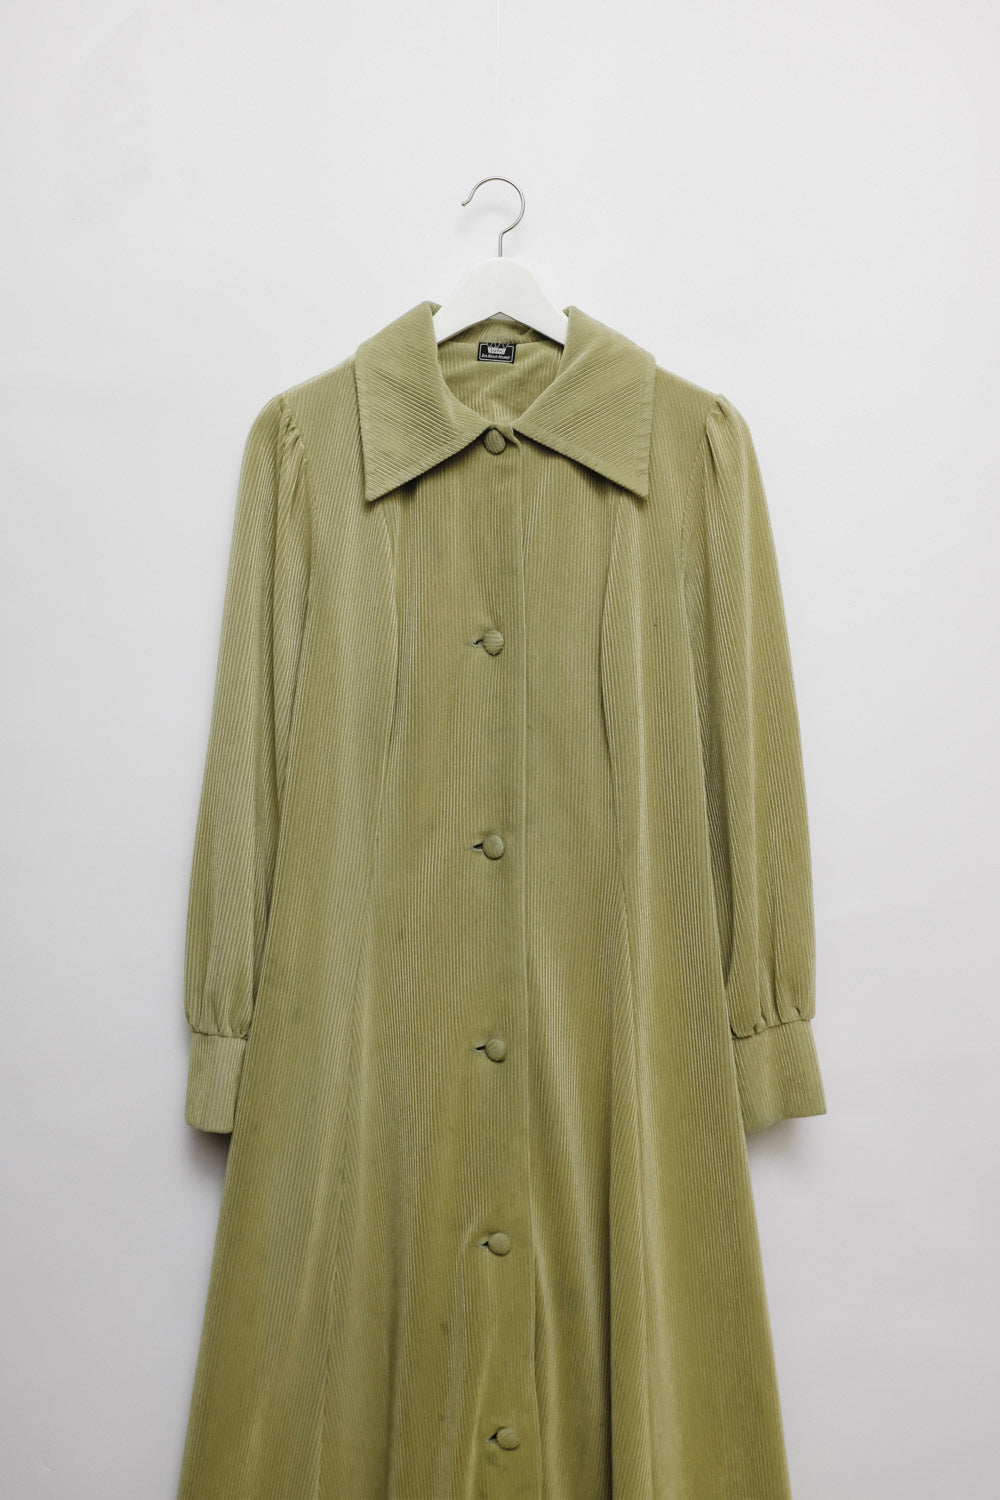 0018_RENTAL MODEL // VINTAGE LONG CORDUROY DRESS COAT